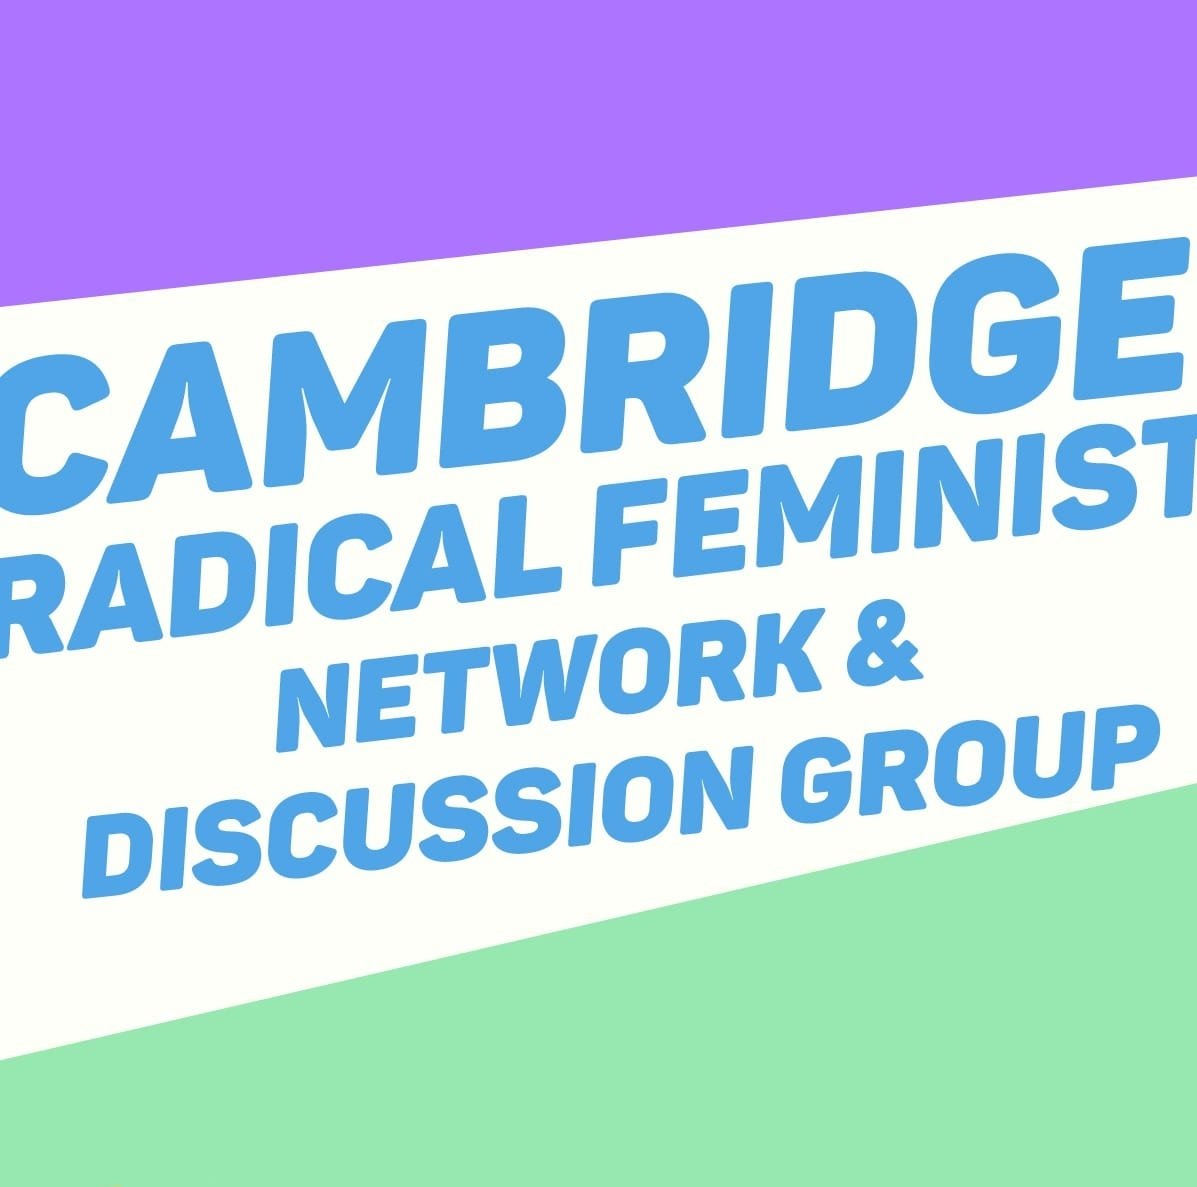 Cambridge Radical Feminist Network